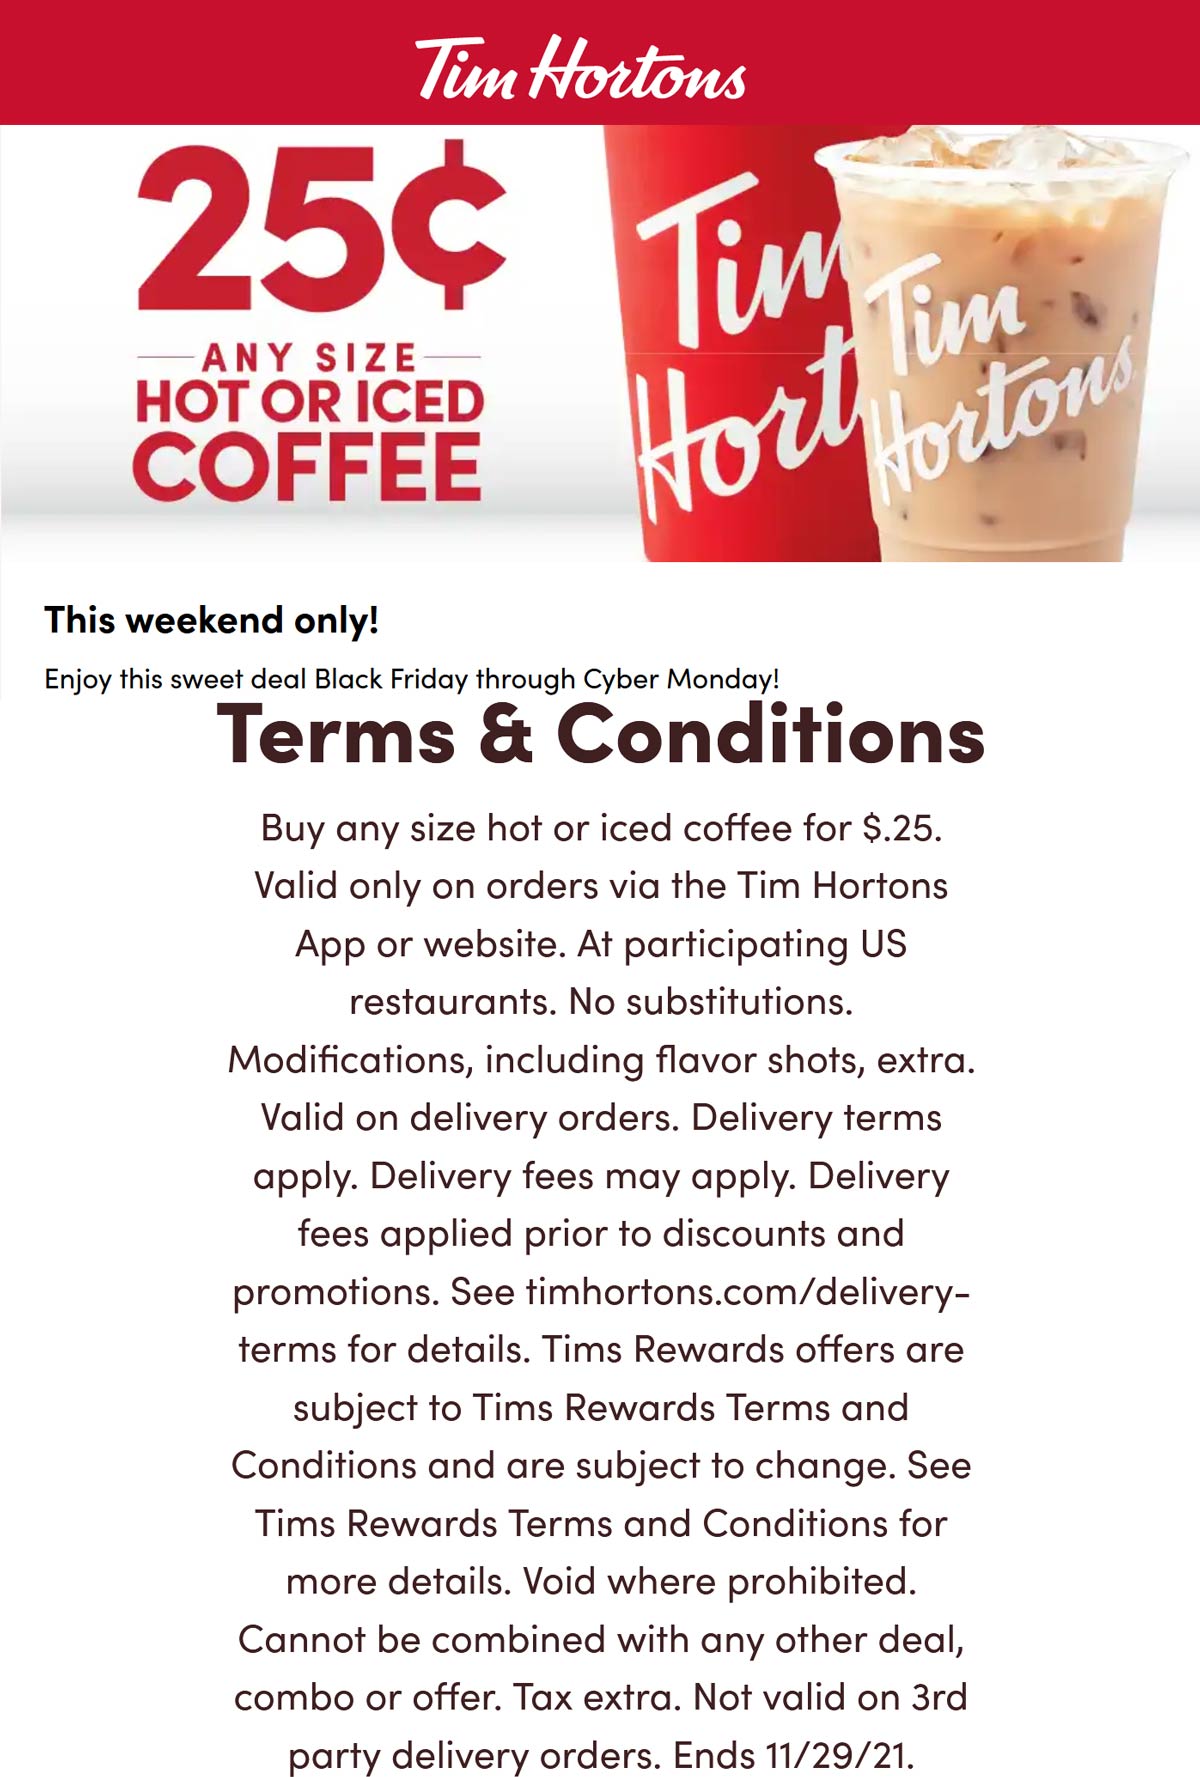 Tim Hortons restaurants Coupon  .25 cent coffee at Tim Hortons #timhortons 